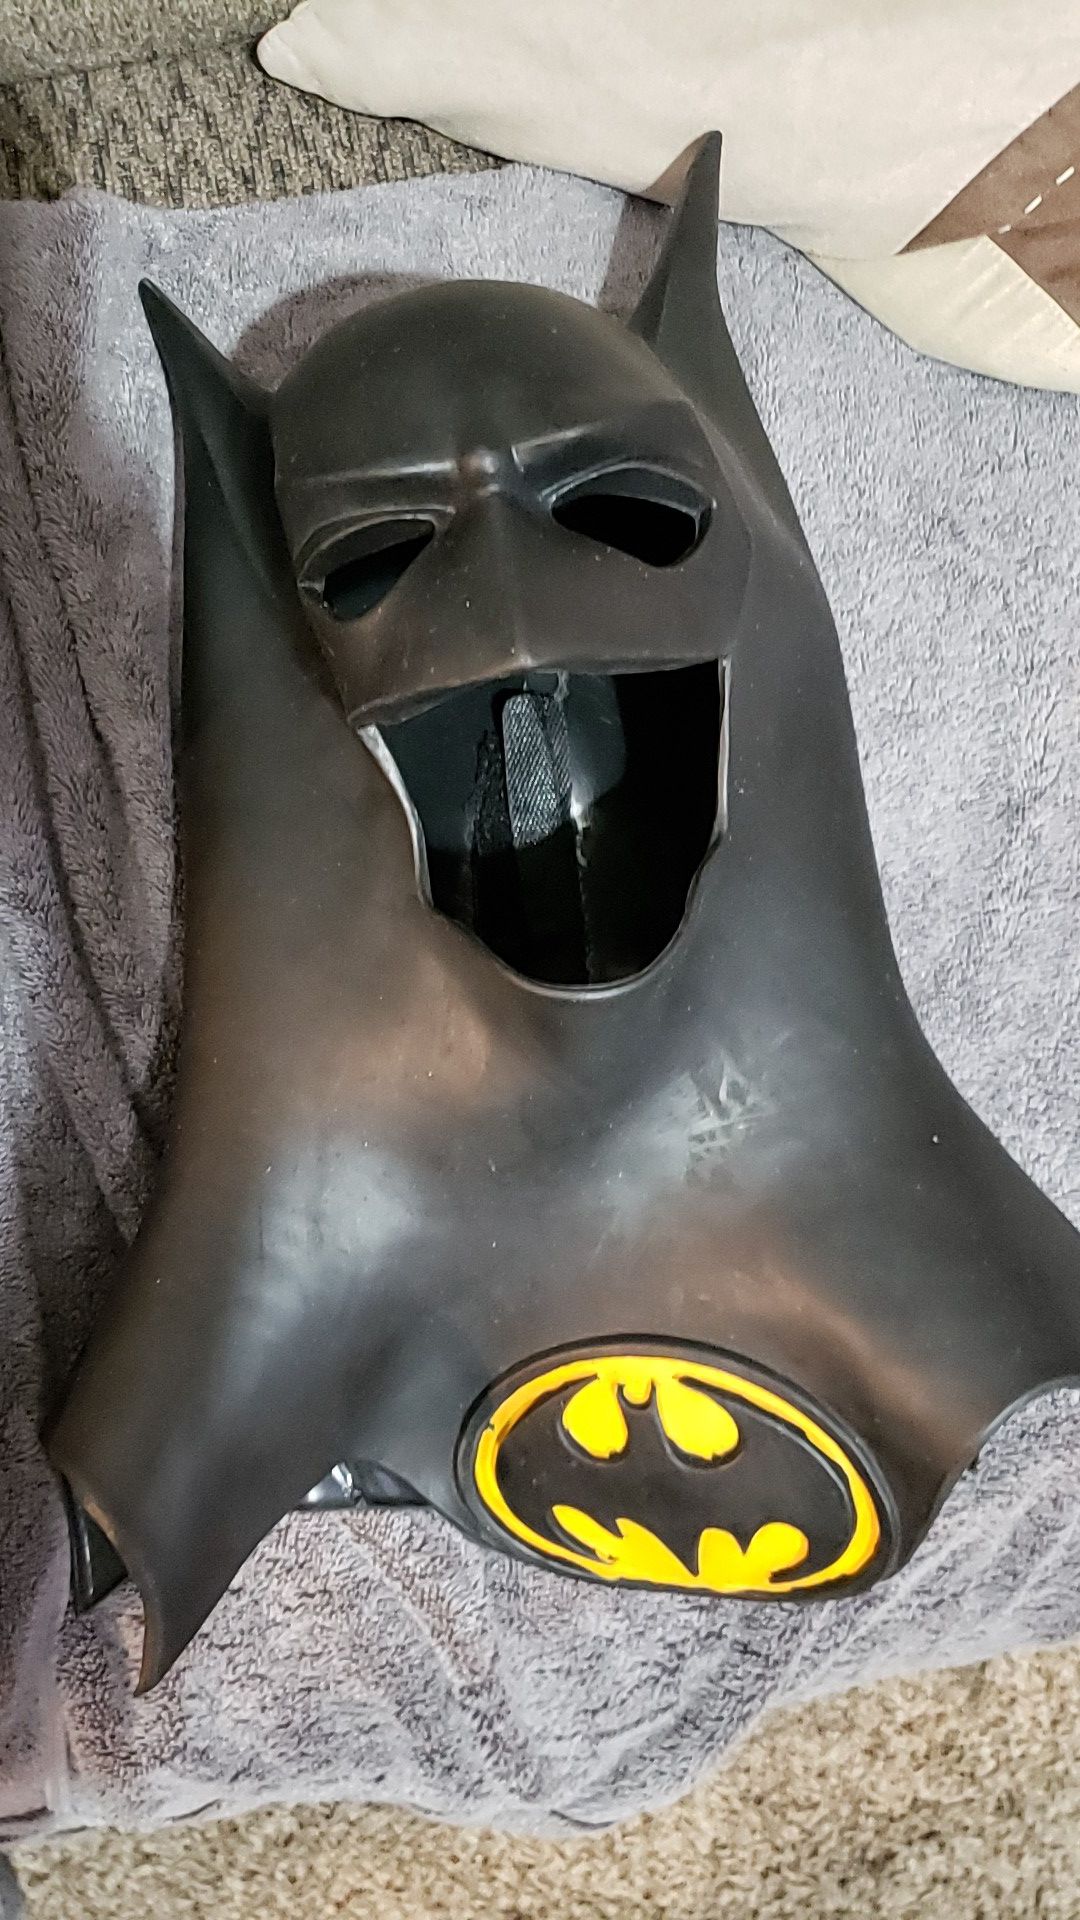 Batman mask